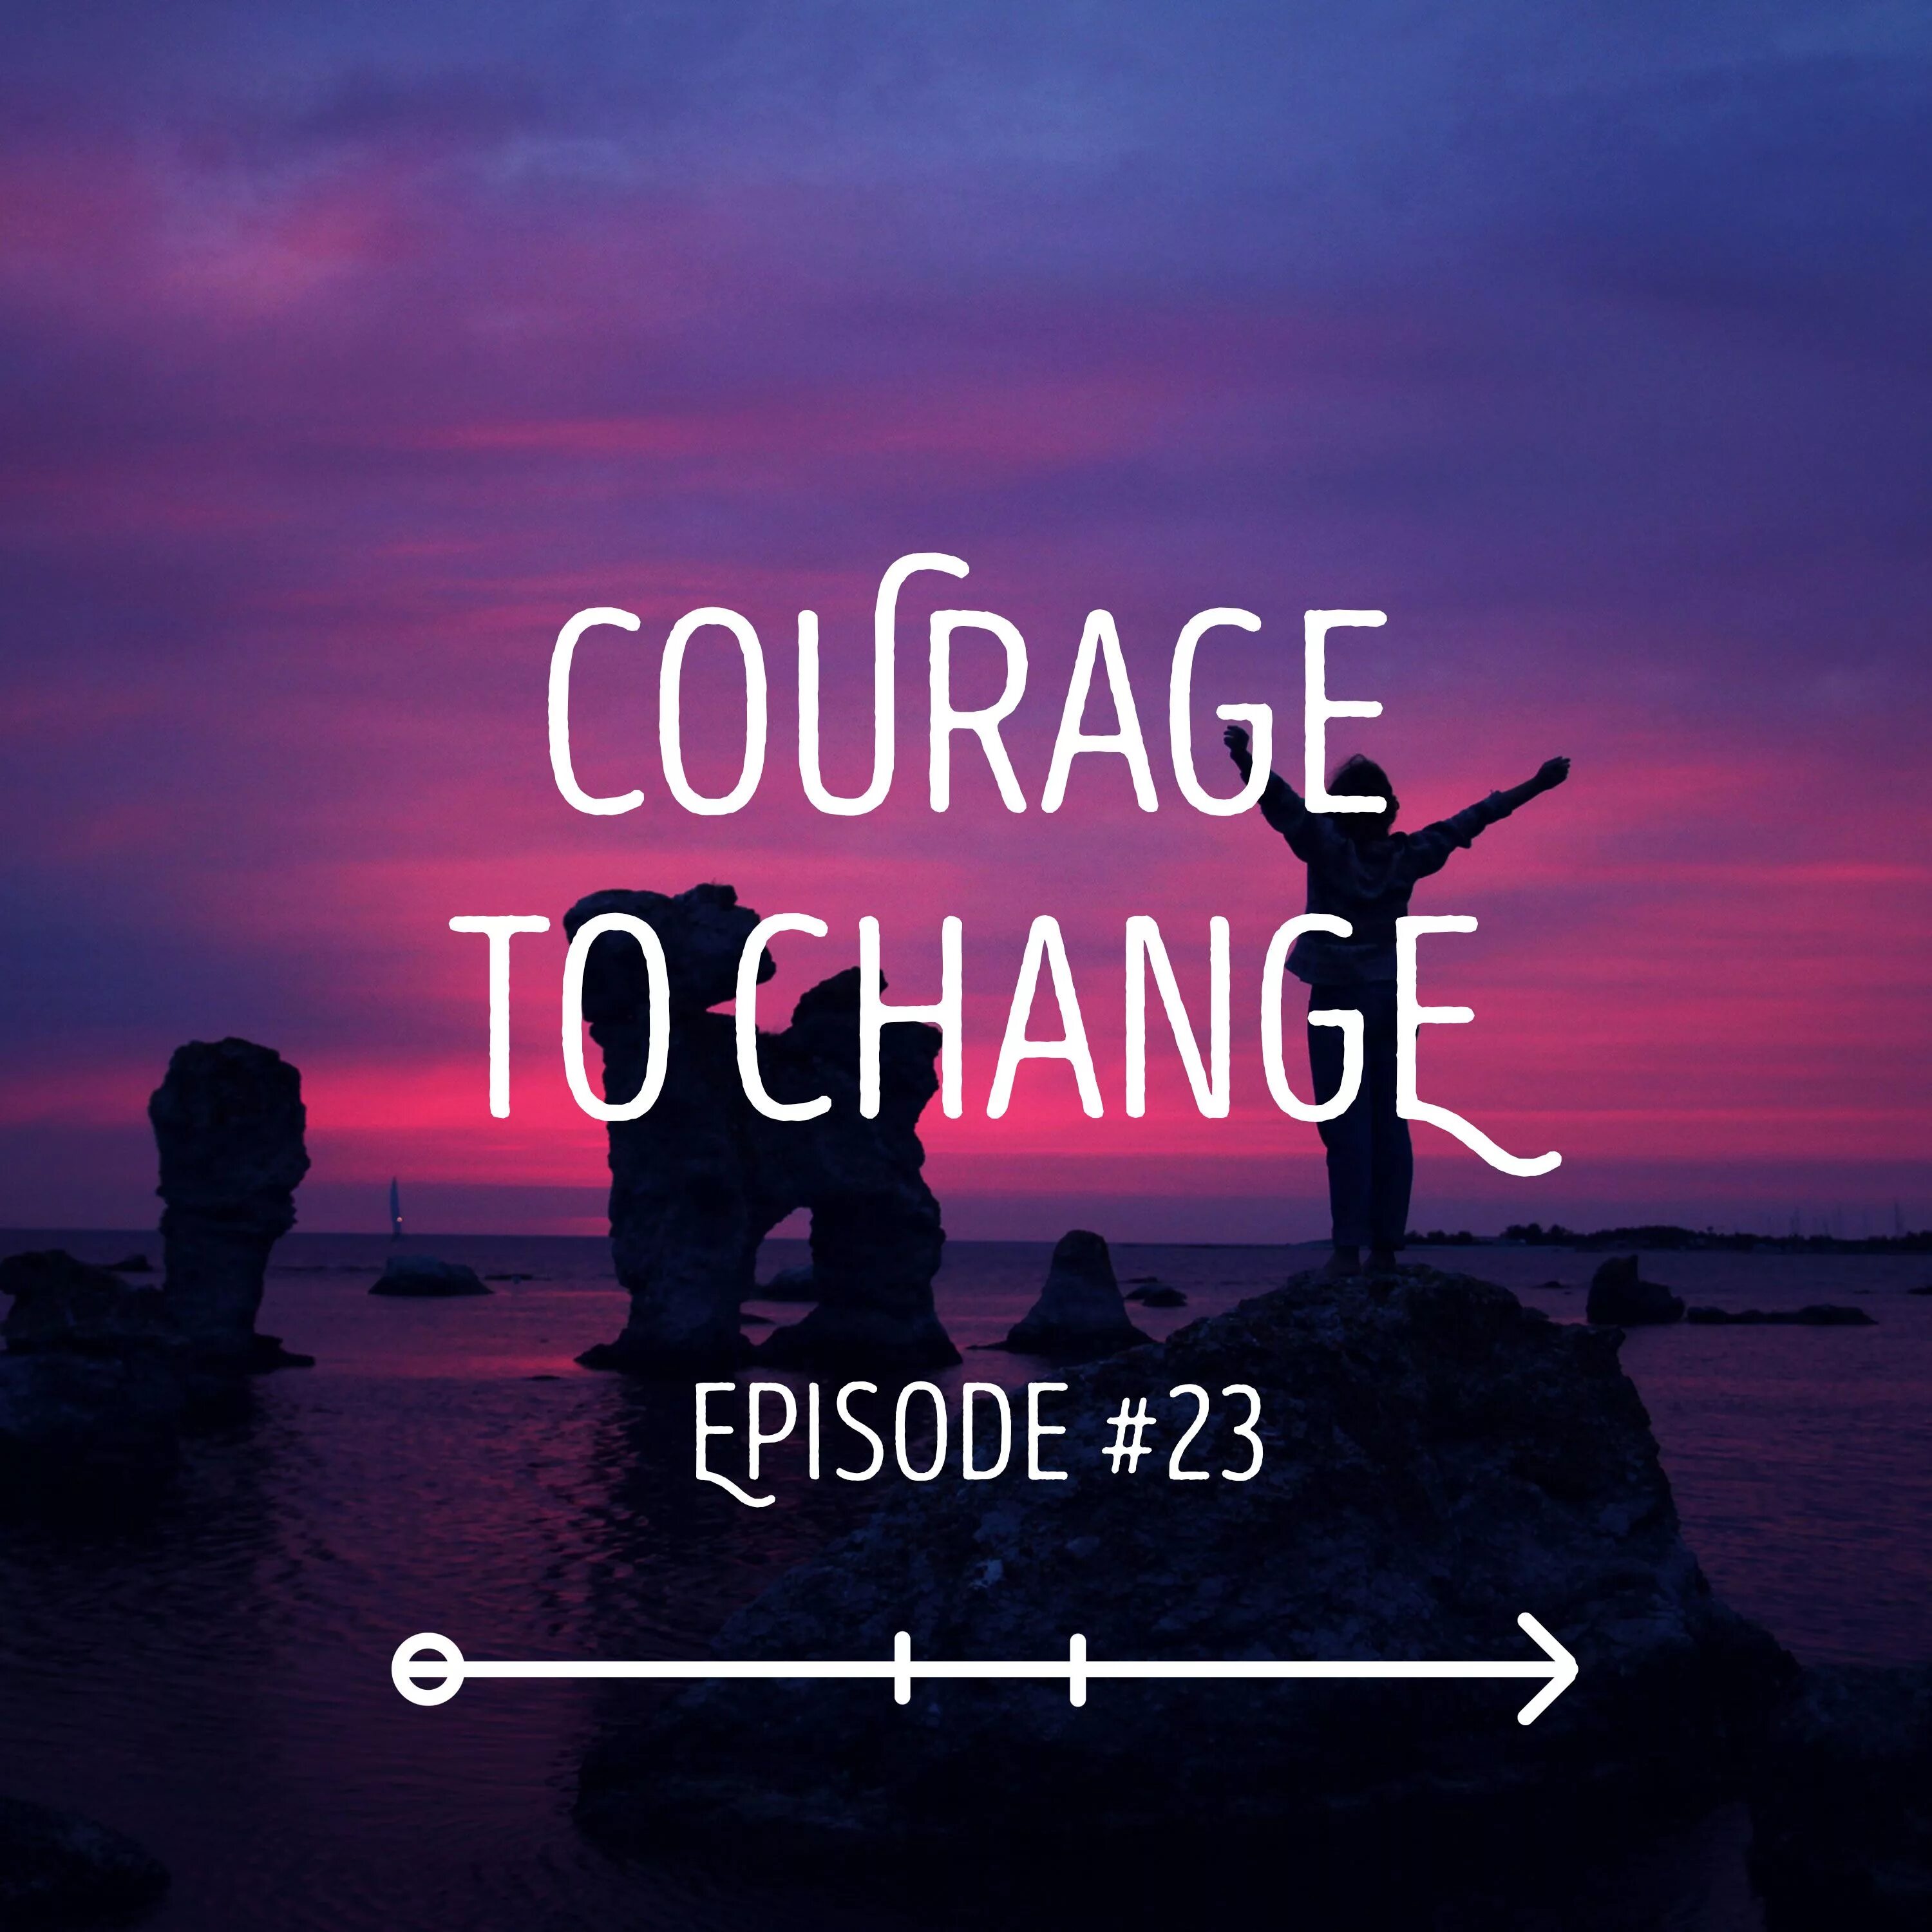 Sia Courage to change. Courage to change. Courage to change Sia альбом. The Courage to Dream. Sia change